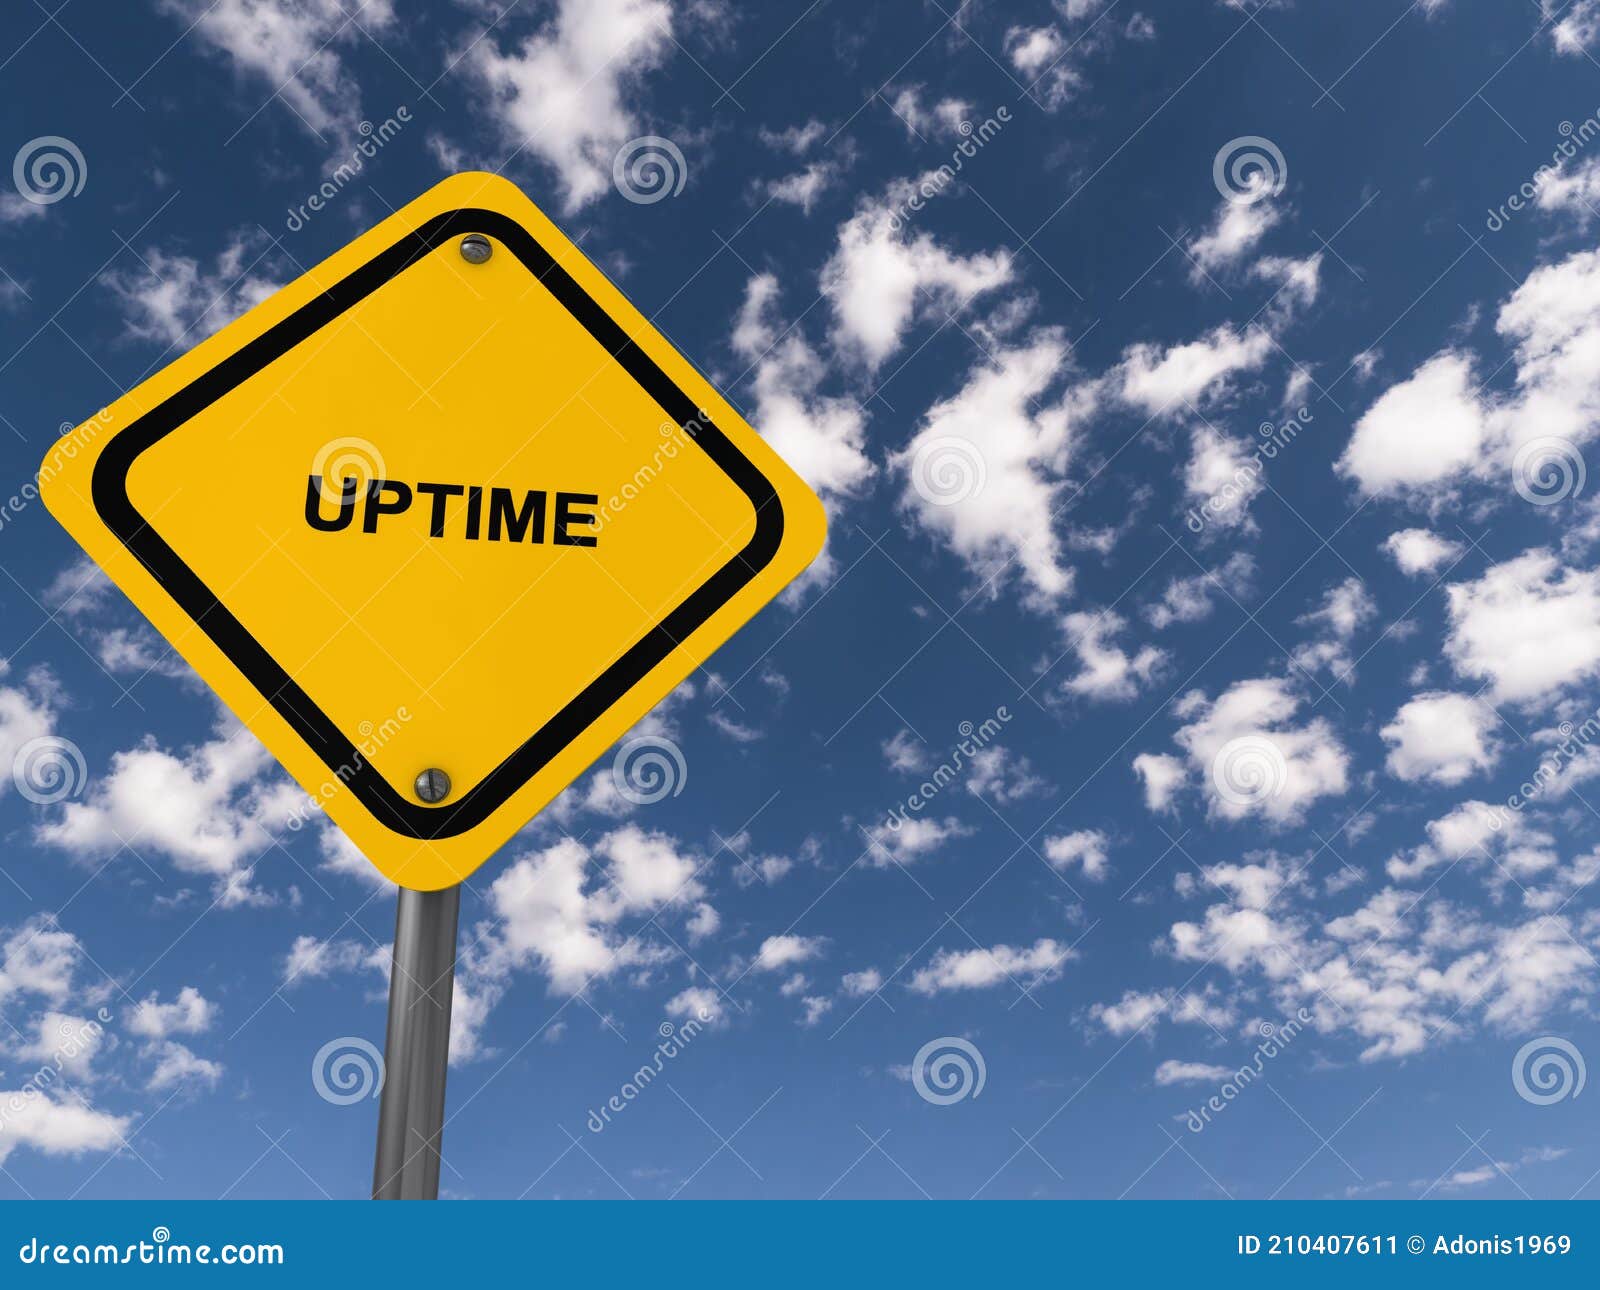 uptime traffic sign